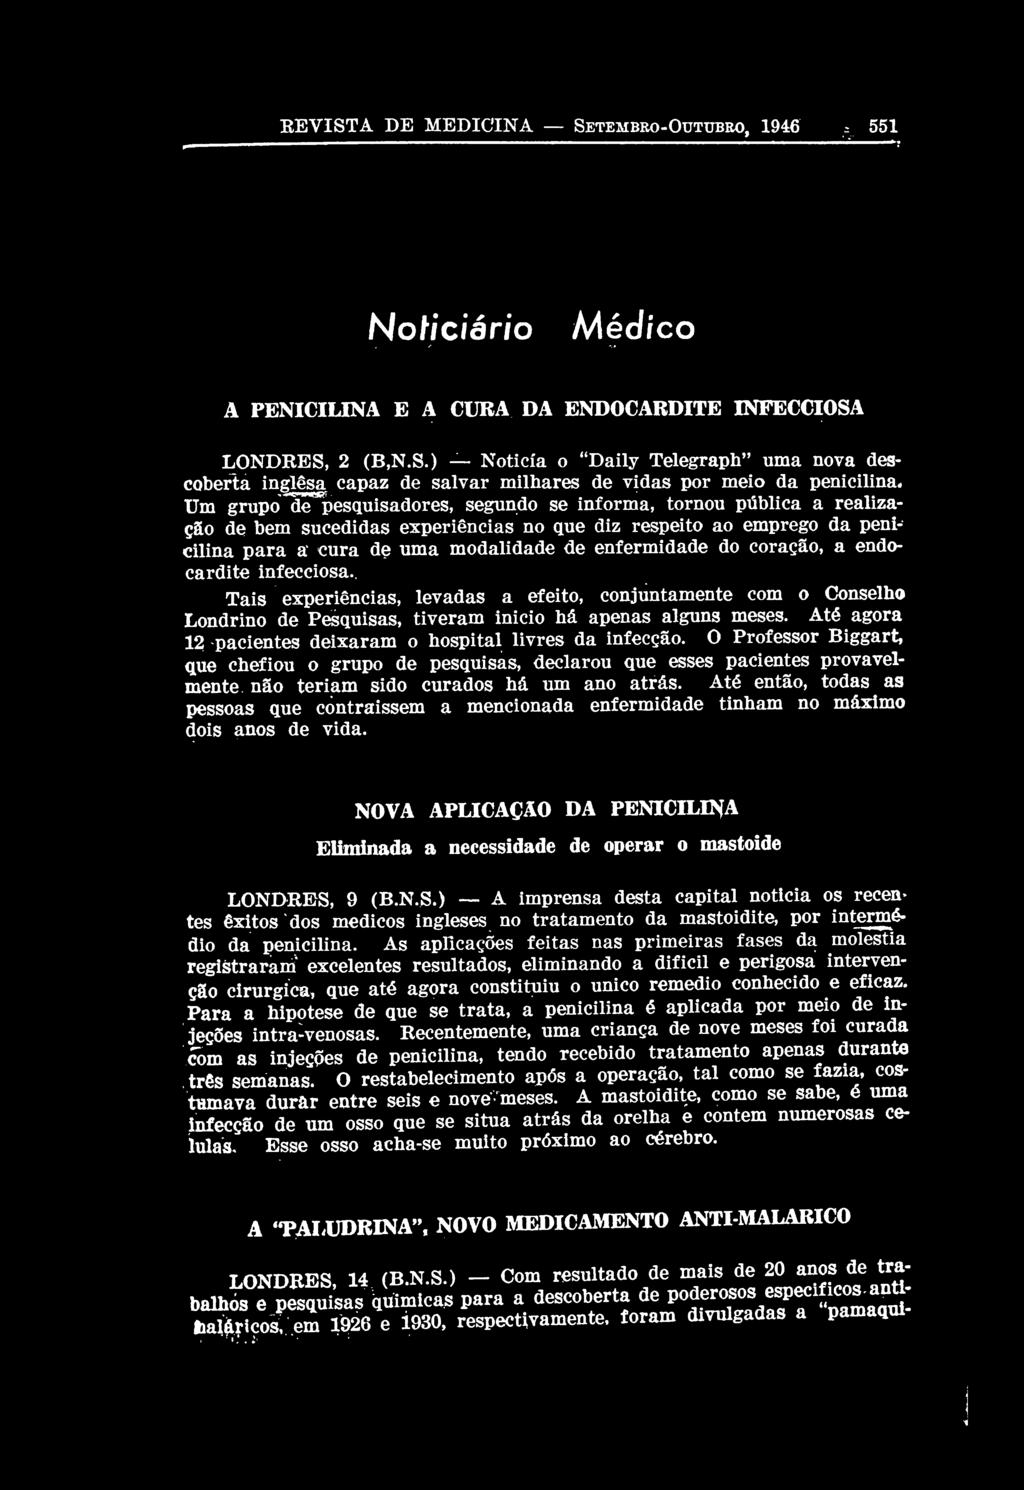 TEMBRO-OUTUBRO, 1946, 551 Noticiário Médico A PENICILINA E A CURA DA ENDOCARDITE INFECCIOSA